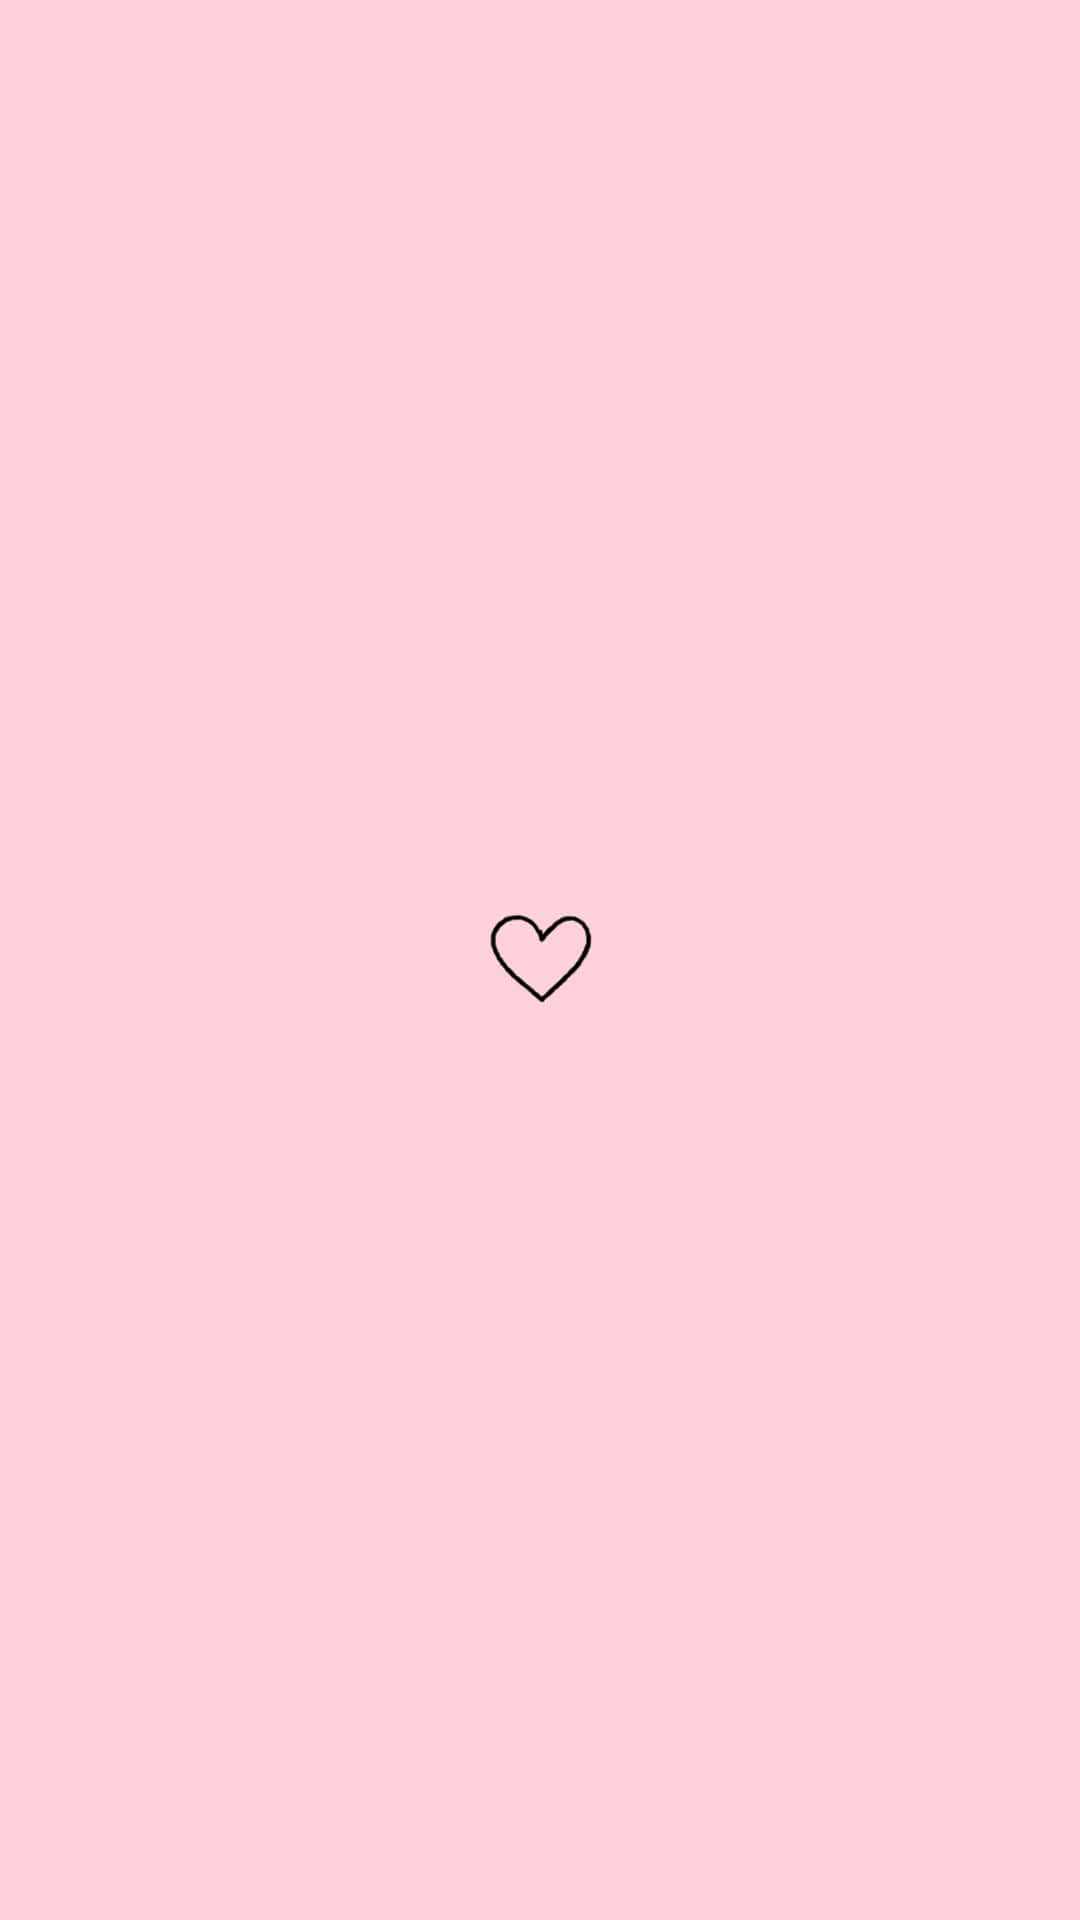 Aesthetic Instagram Minimalist Heart